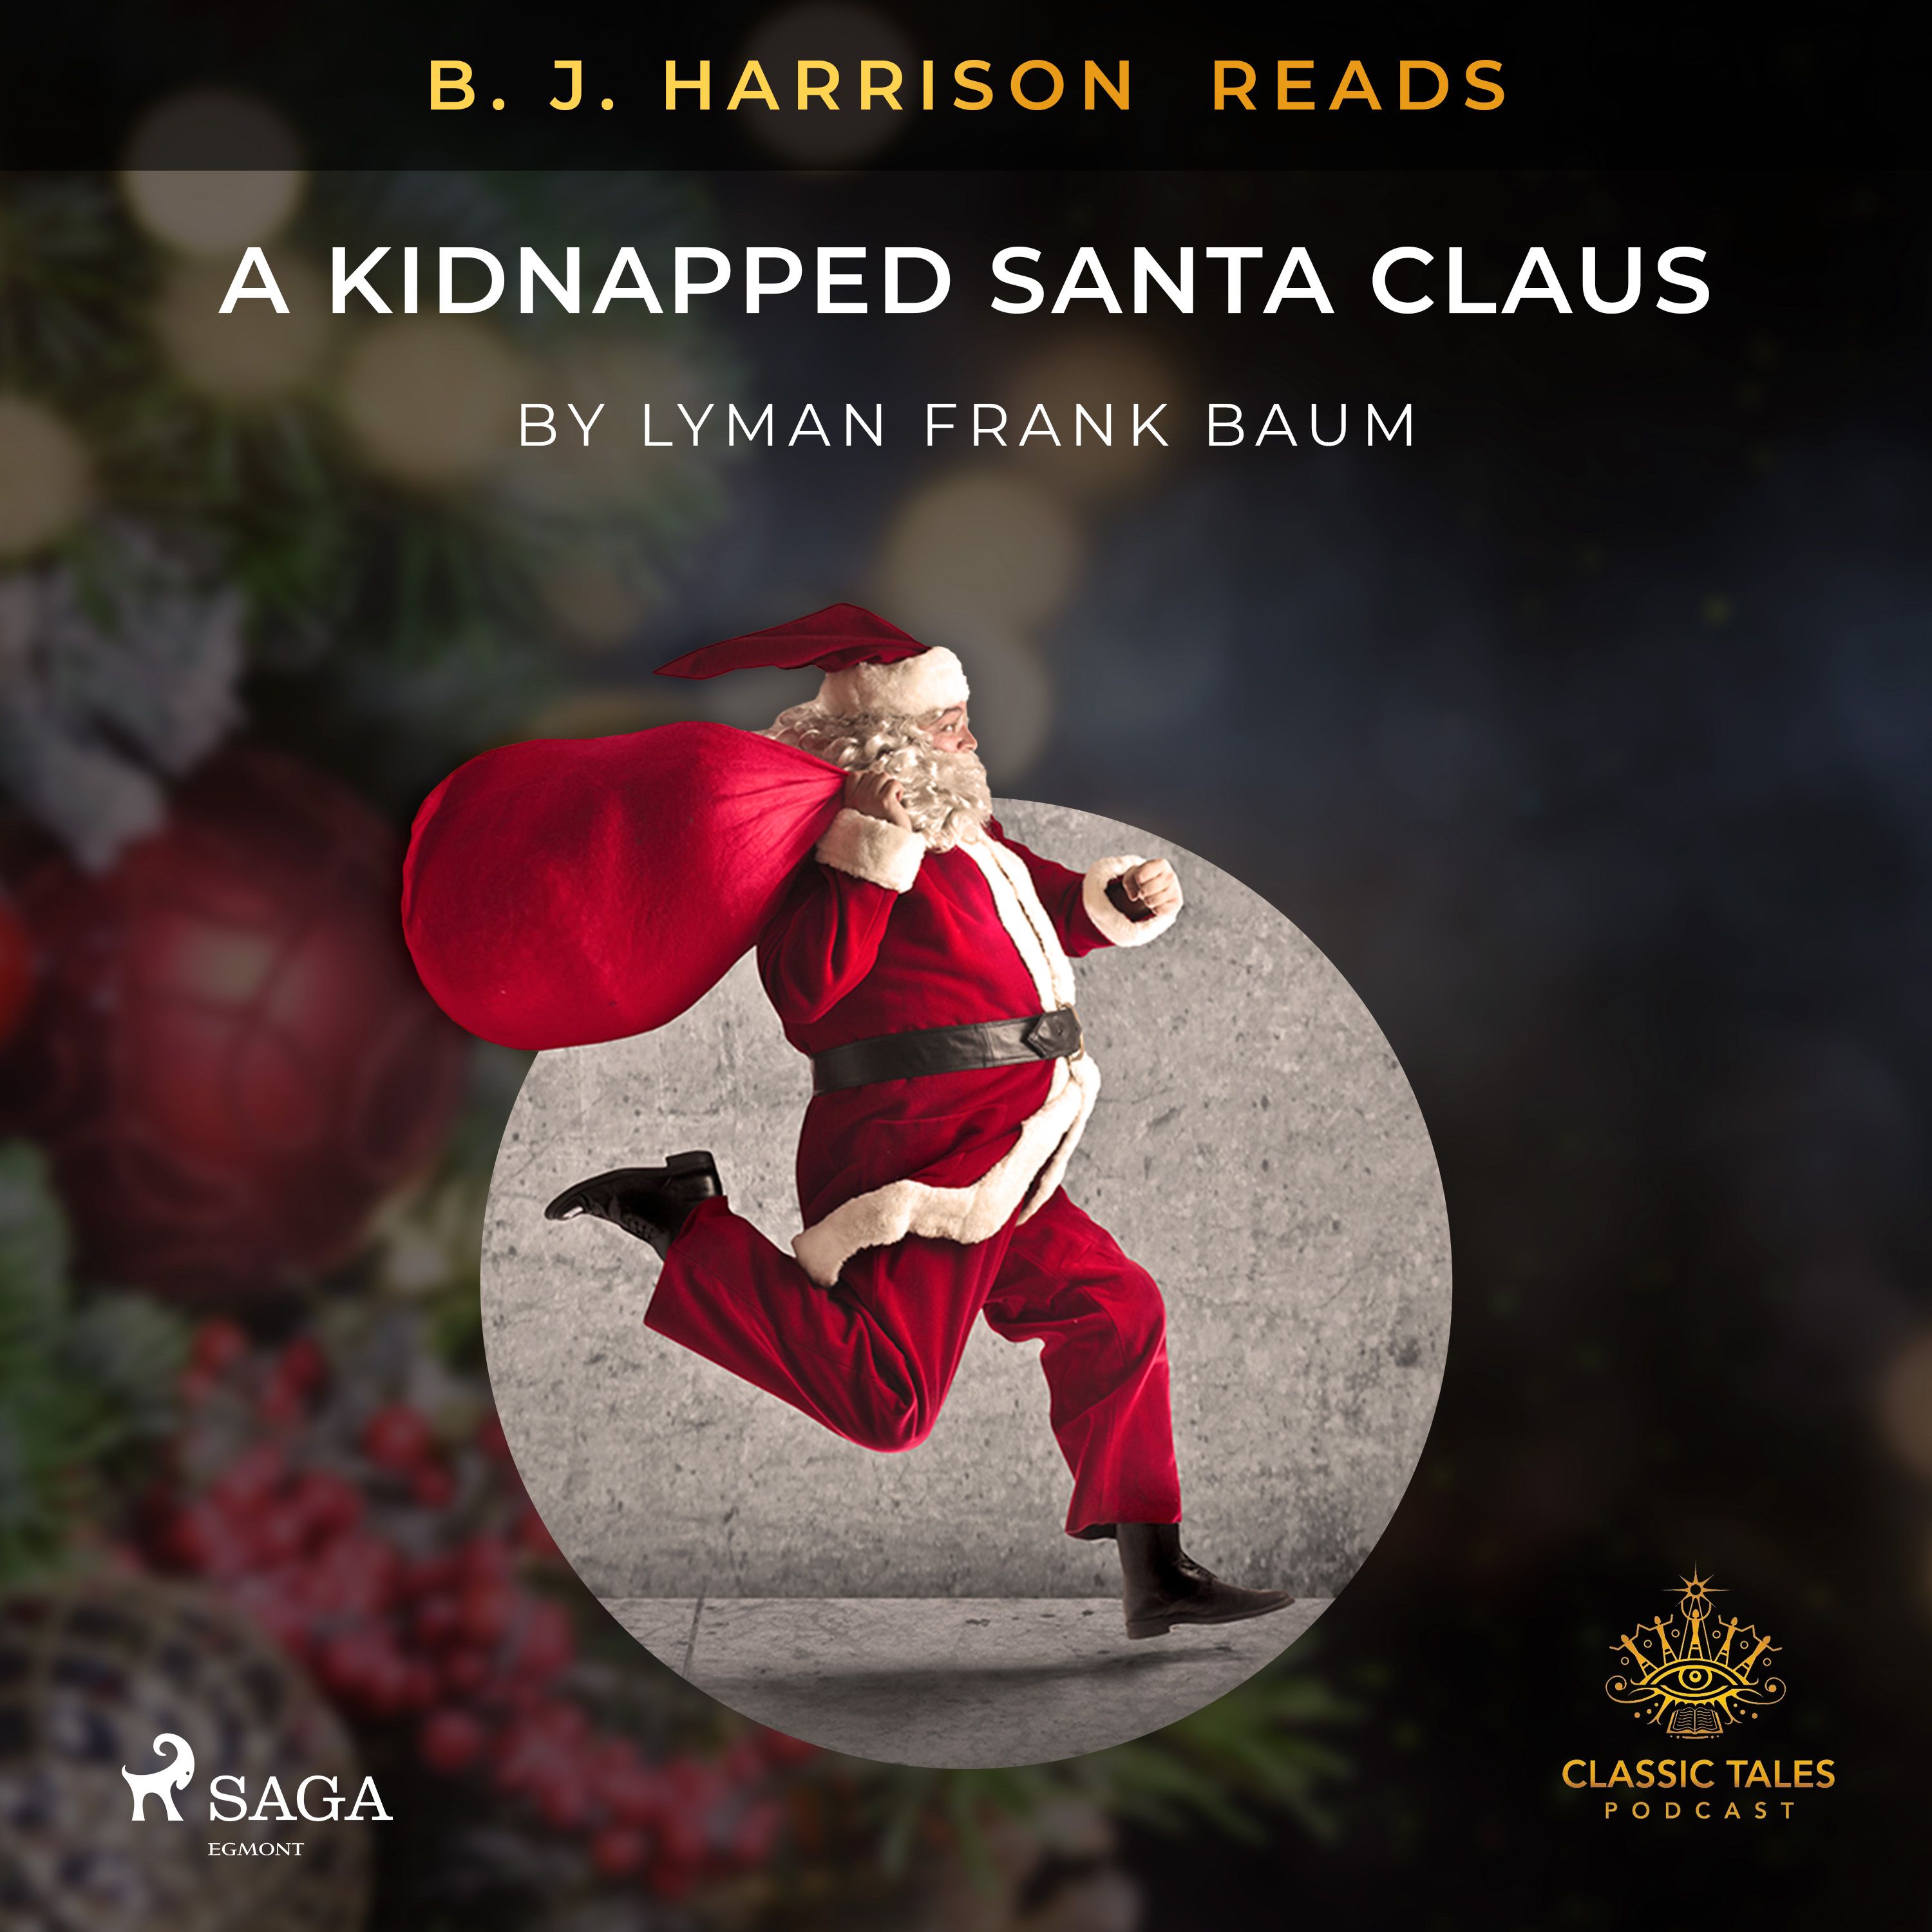 B. J. Harrison Reads A Kidnapped Santa Claus, ljudbok av L. Frank. Baum